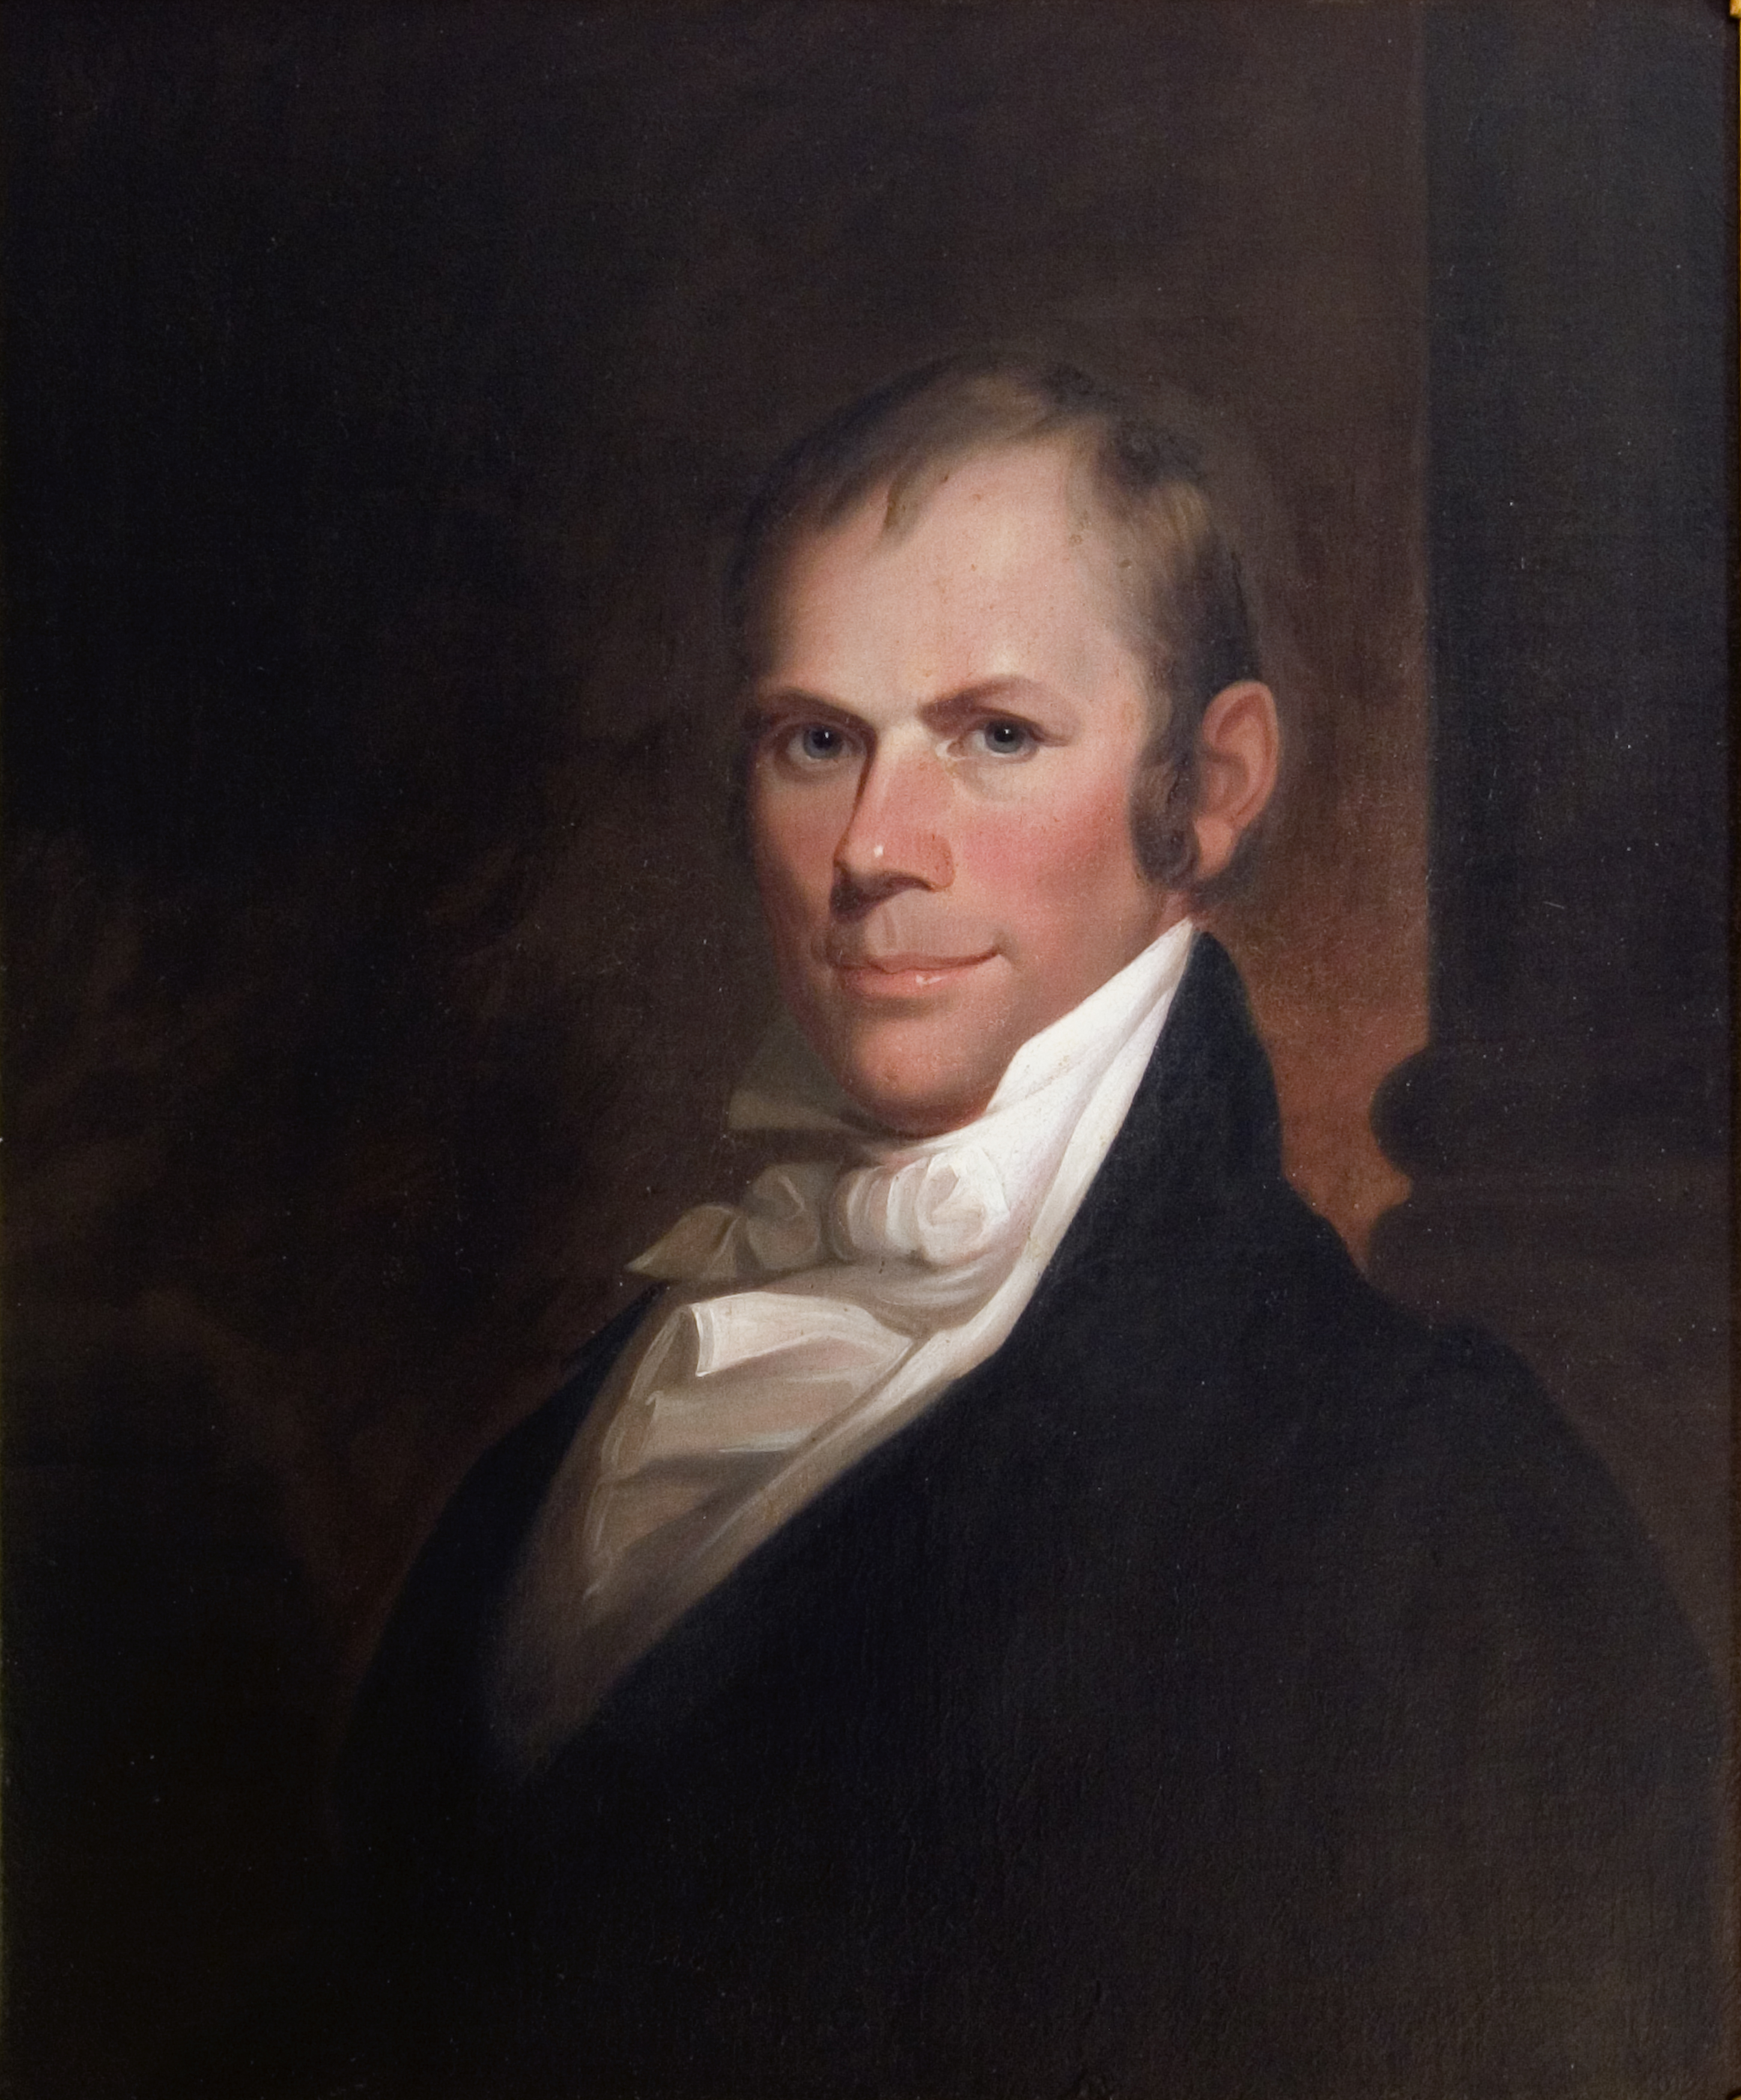 Henry Clay Net Worth